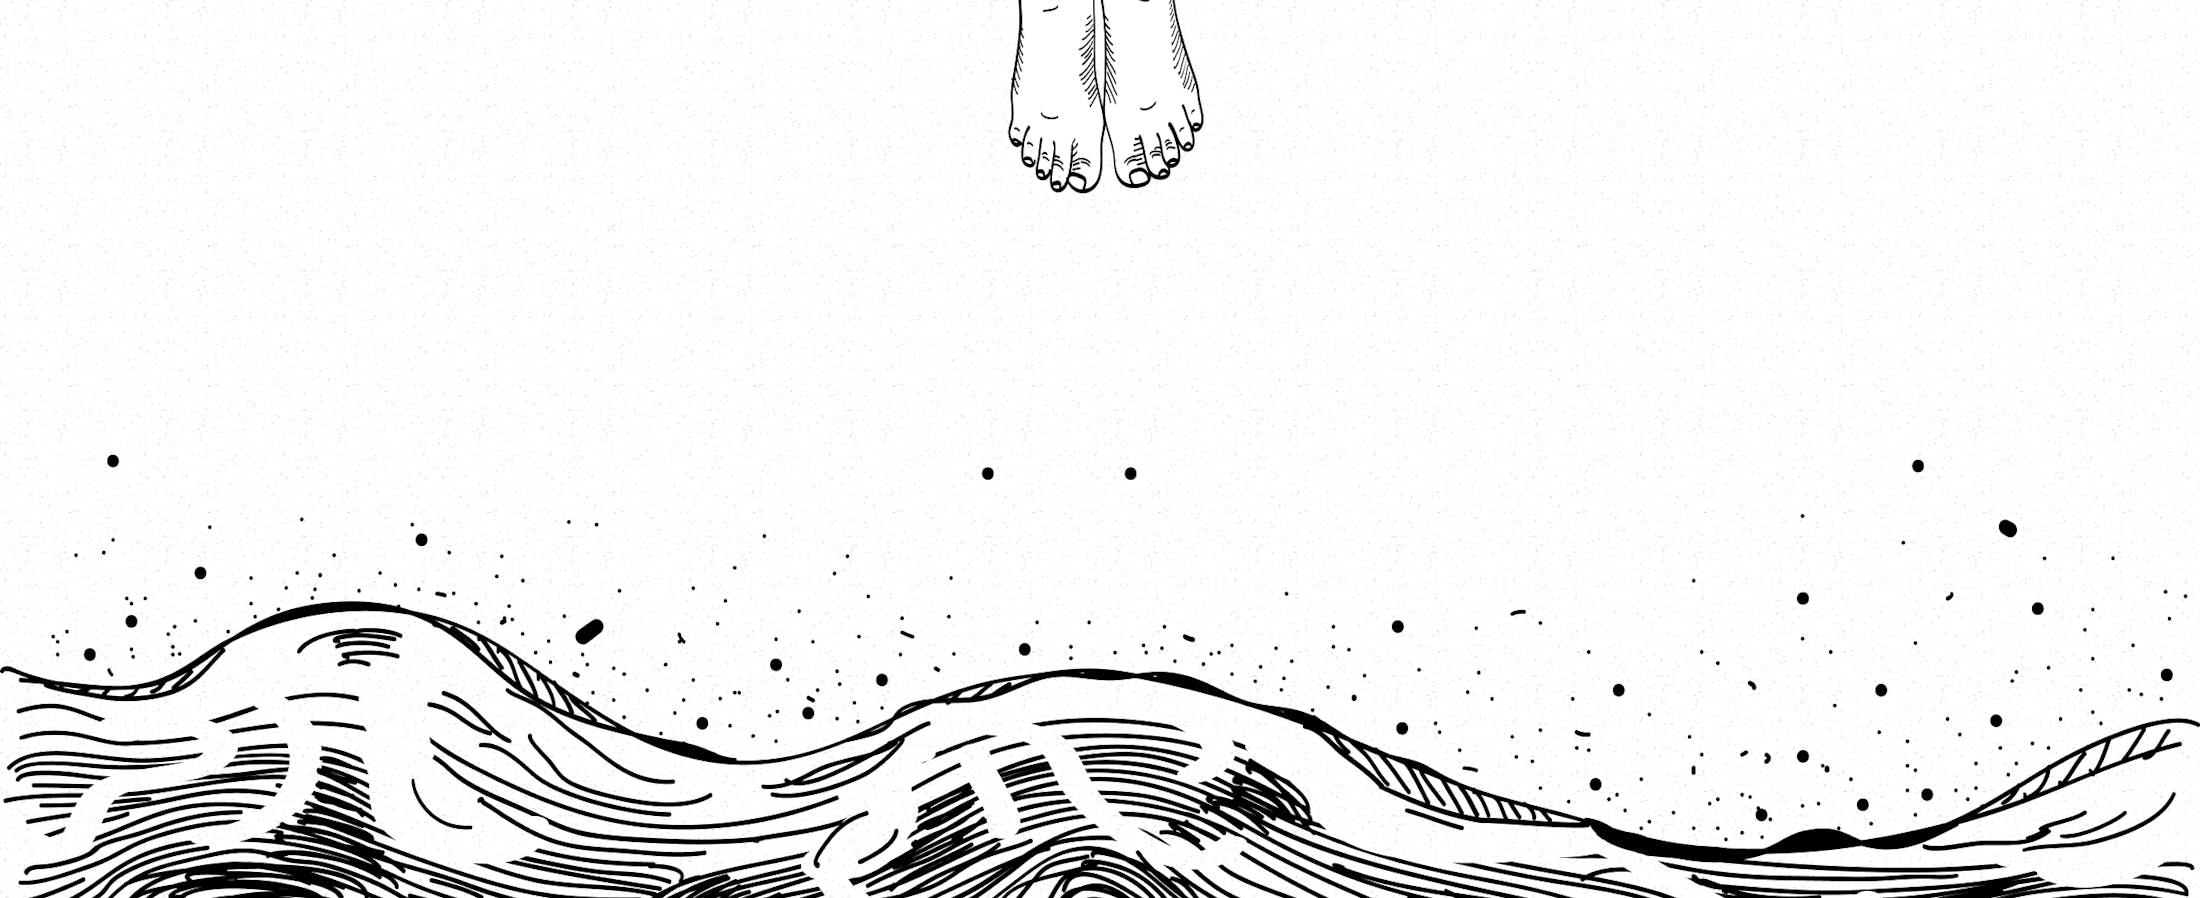 Illustration of feet on a beach